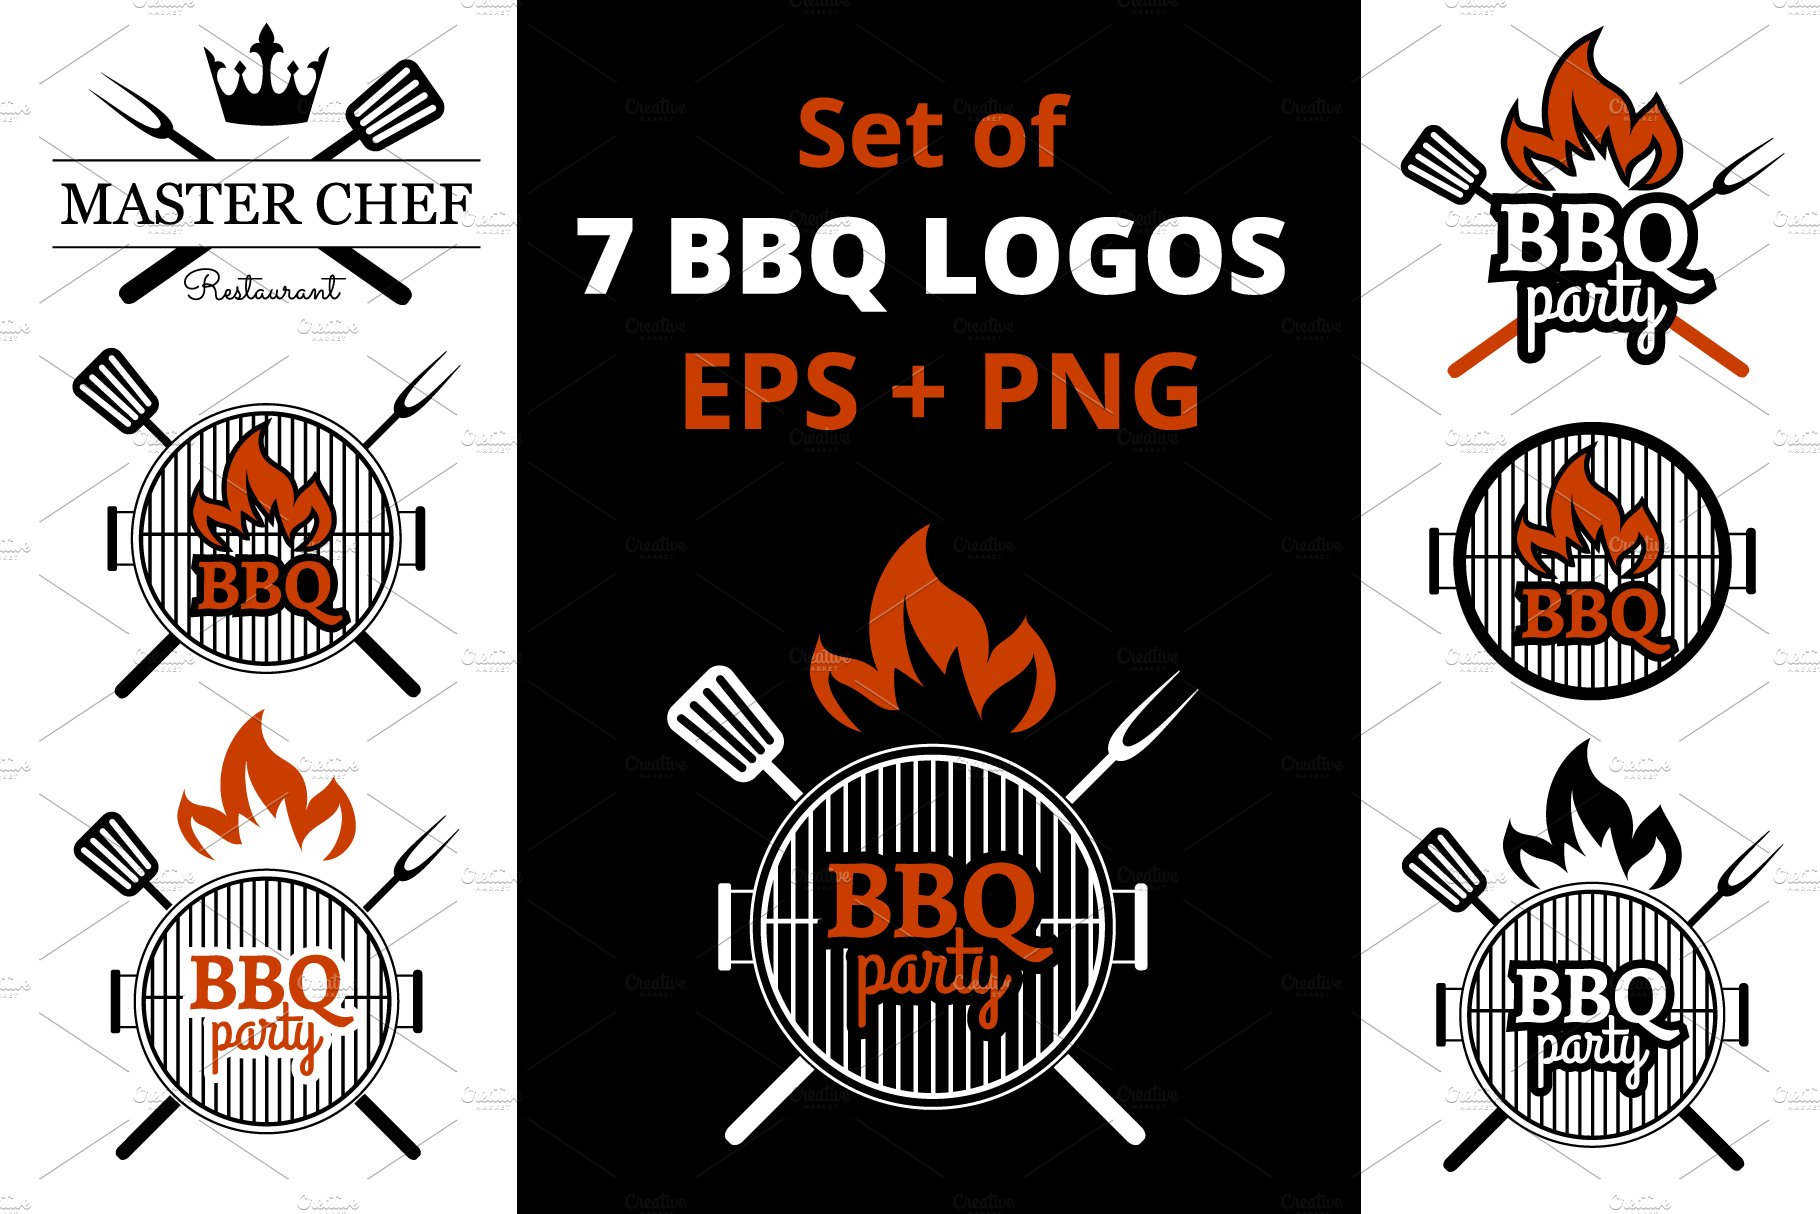 BBQ Grill Party Logos (EPS, PNG) by Sveta Aho on Dribbble